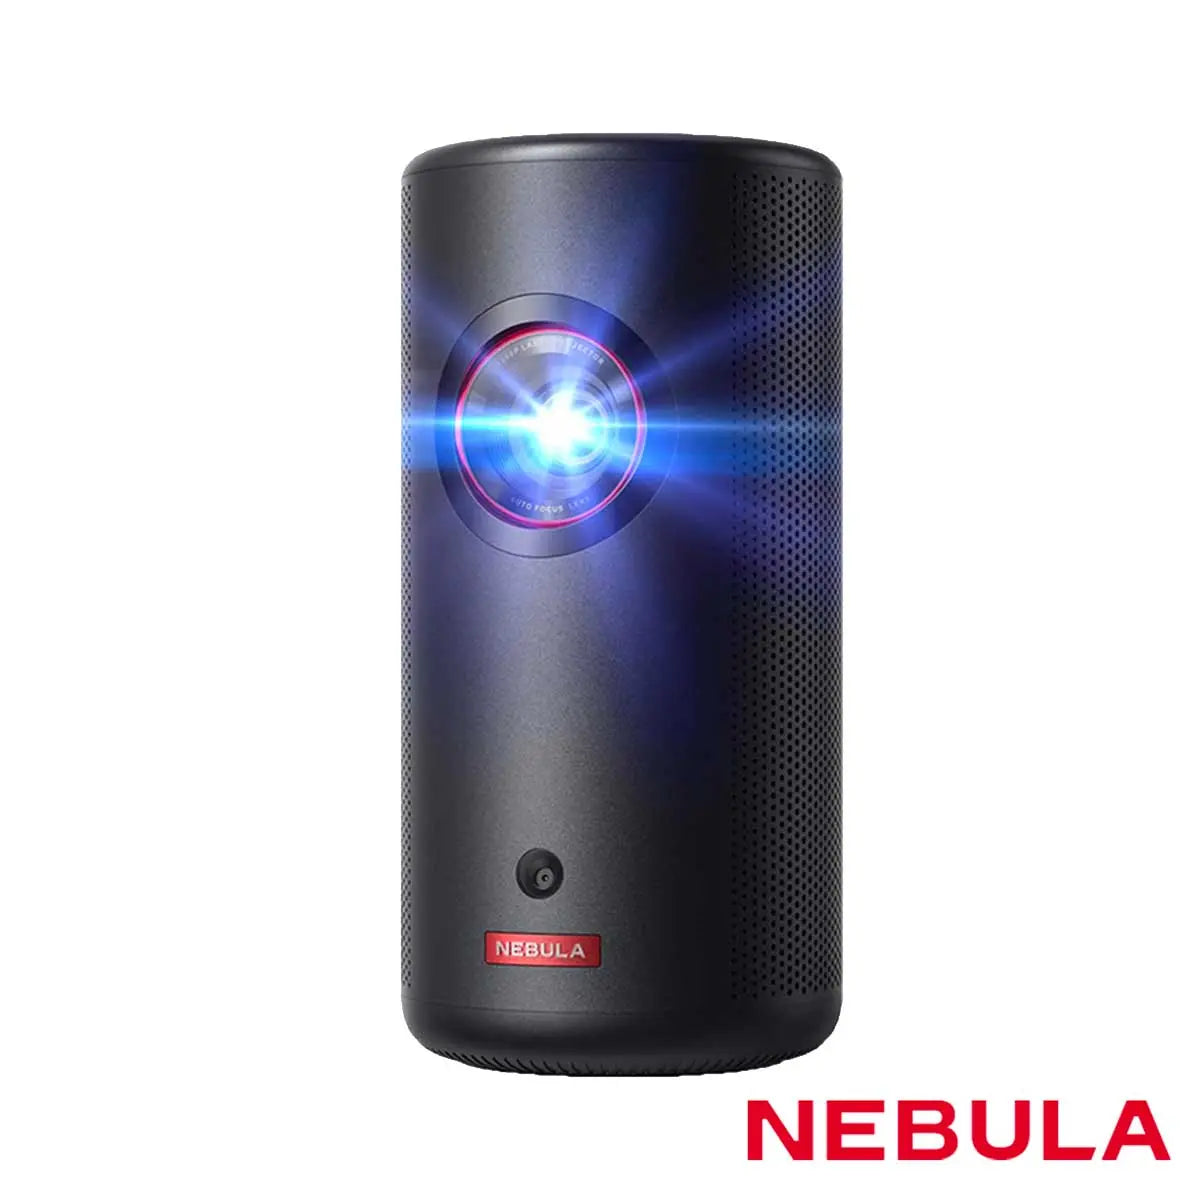 NEBULA Capsule 3 Laser 1080p Projector D2426 - Anker Singapore